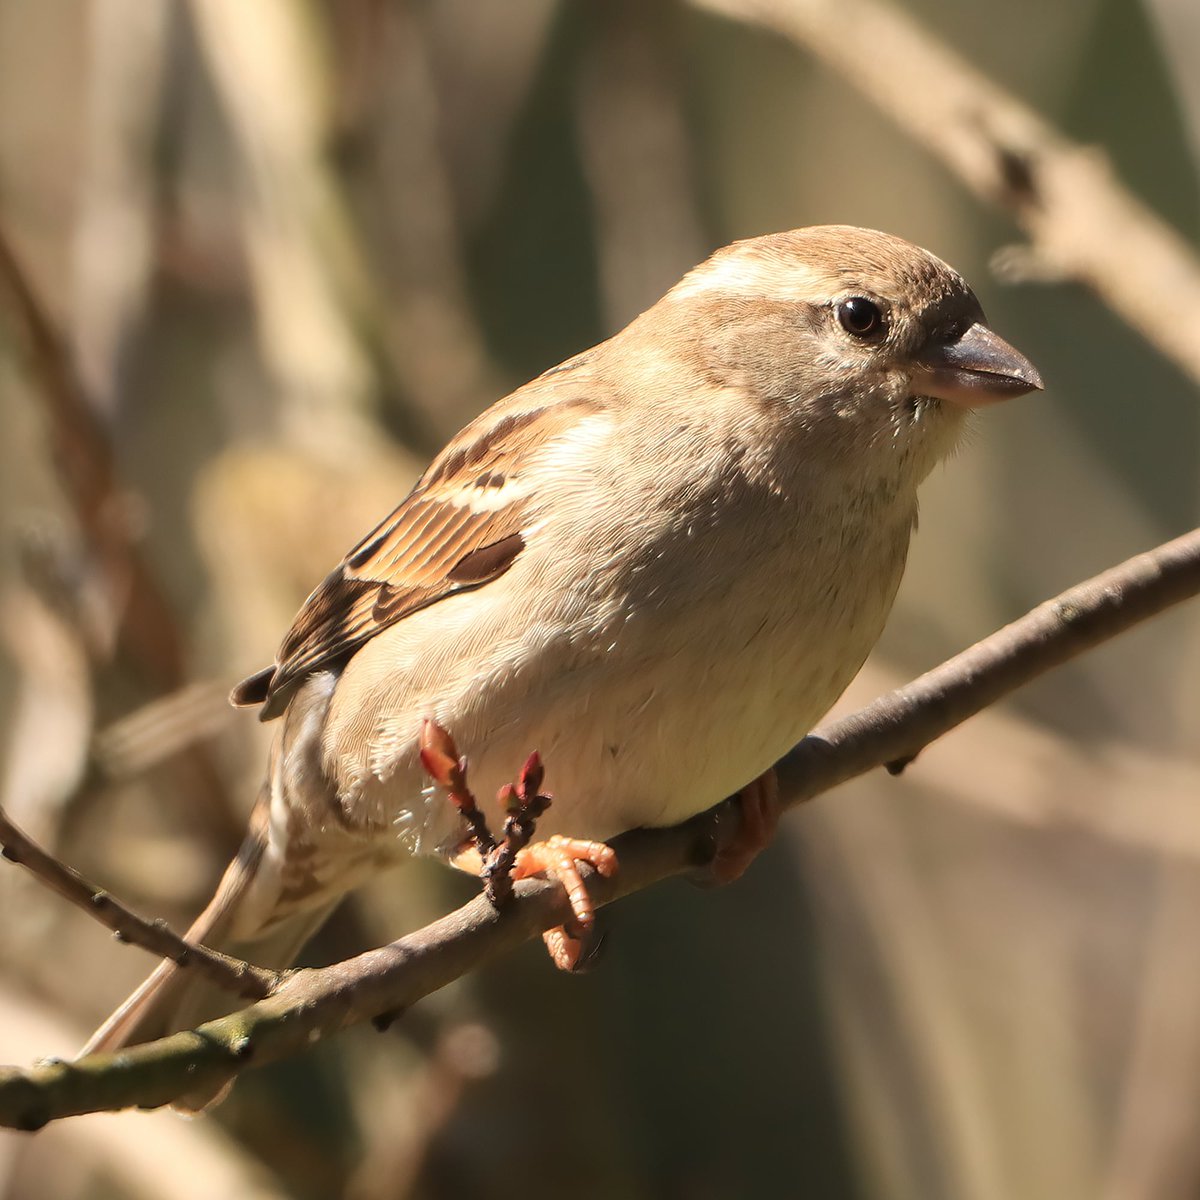 A female house sparrow is enjoying this sunny Saturday...
#housesparrows #housesparrow #sparrows #sparrow #birdpics #sunnysaturday #sunnysaturdays #ohiobirdworld #ohiobirdlovers #birdlovers #birdwatching #birdwatchers #birdlife #birdwatchersdaily